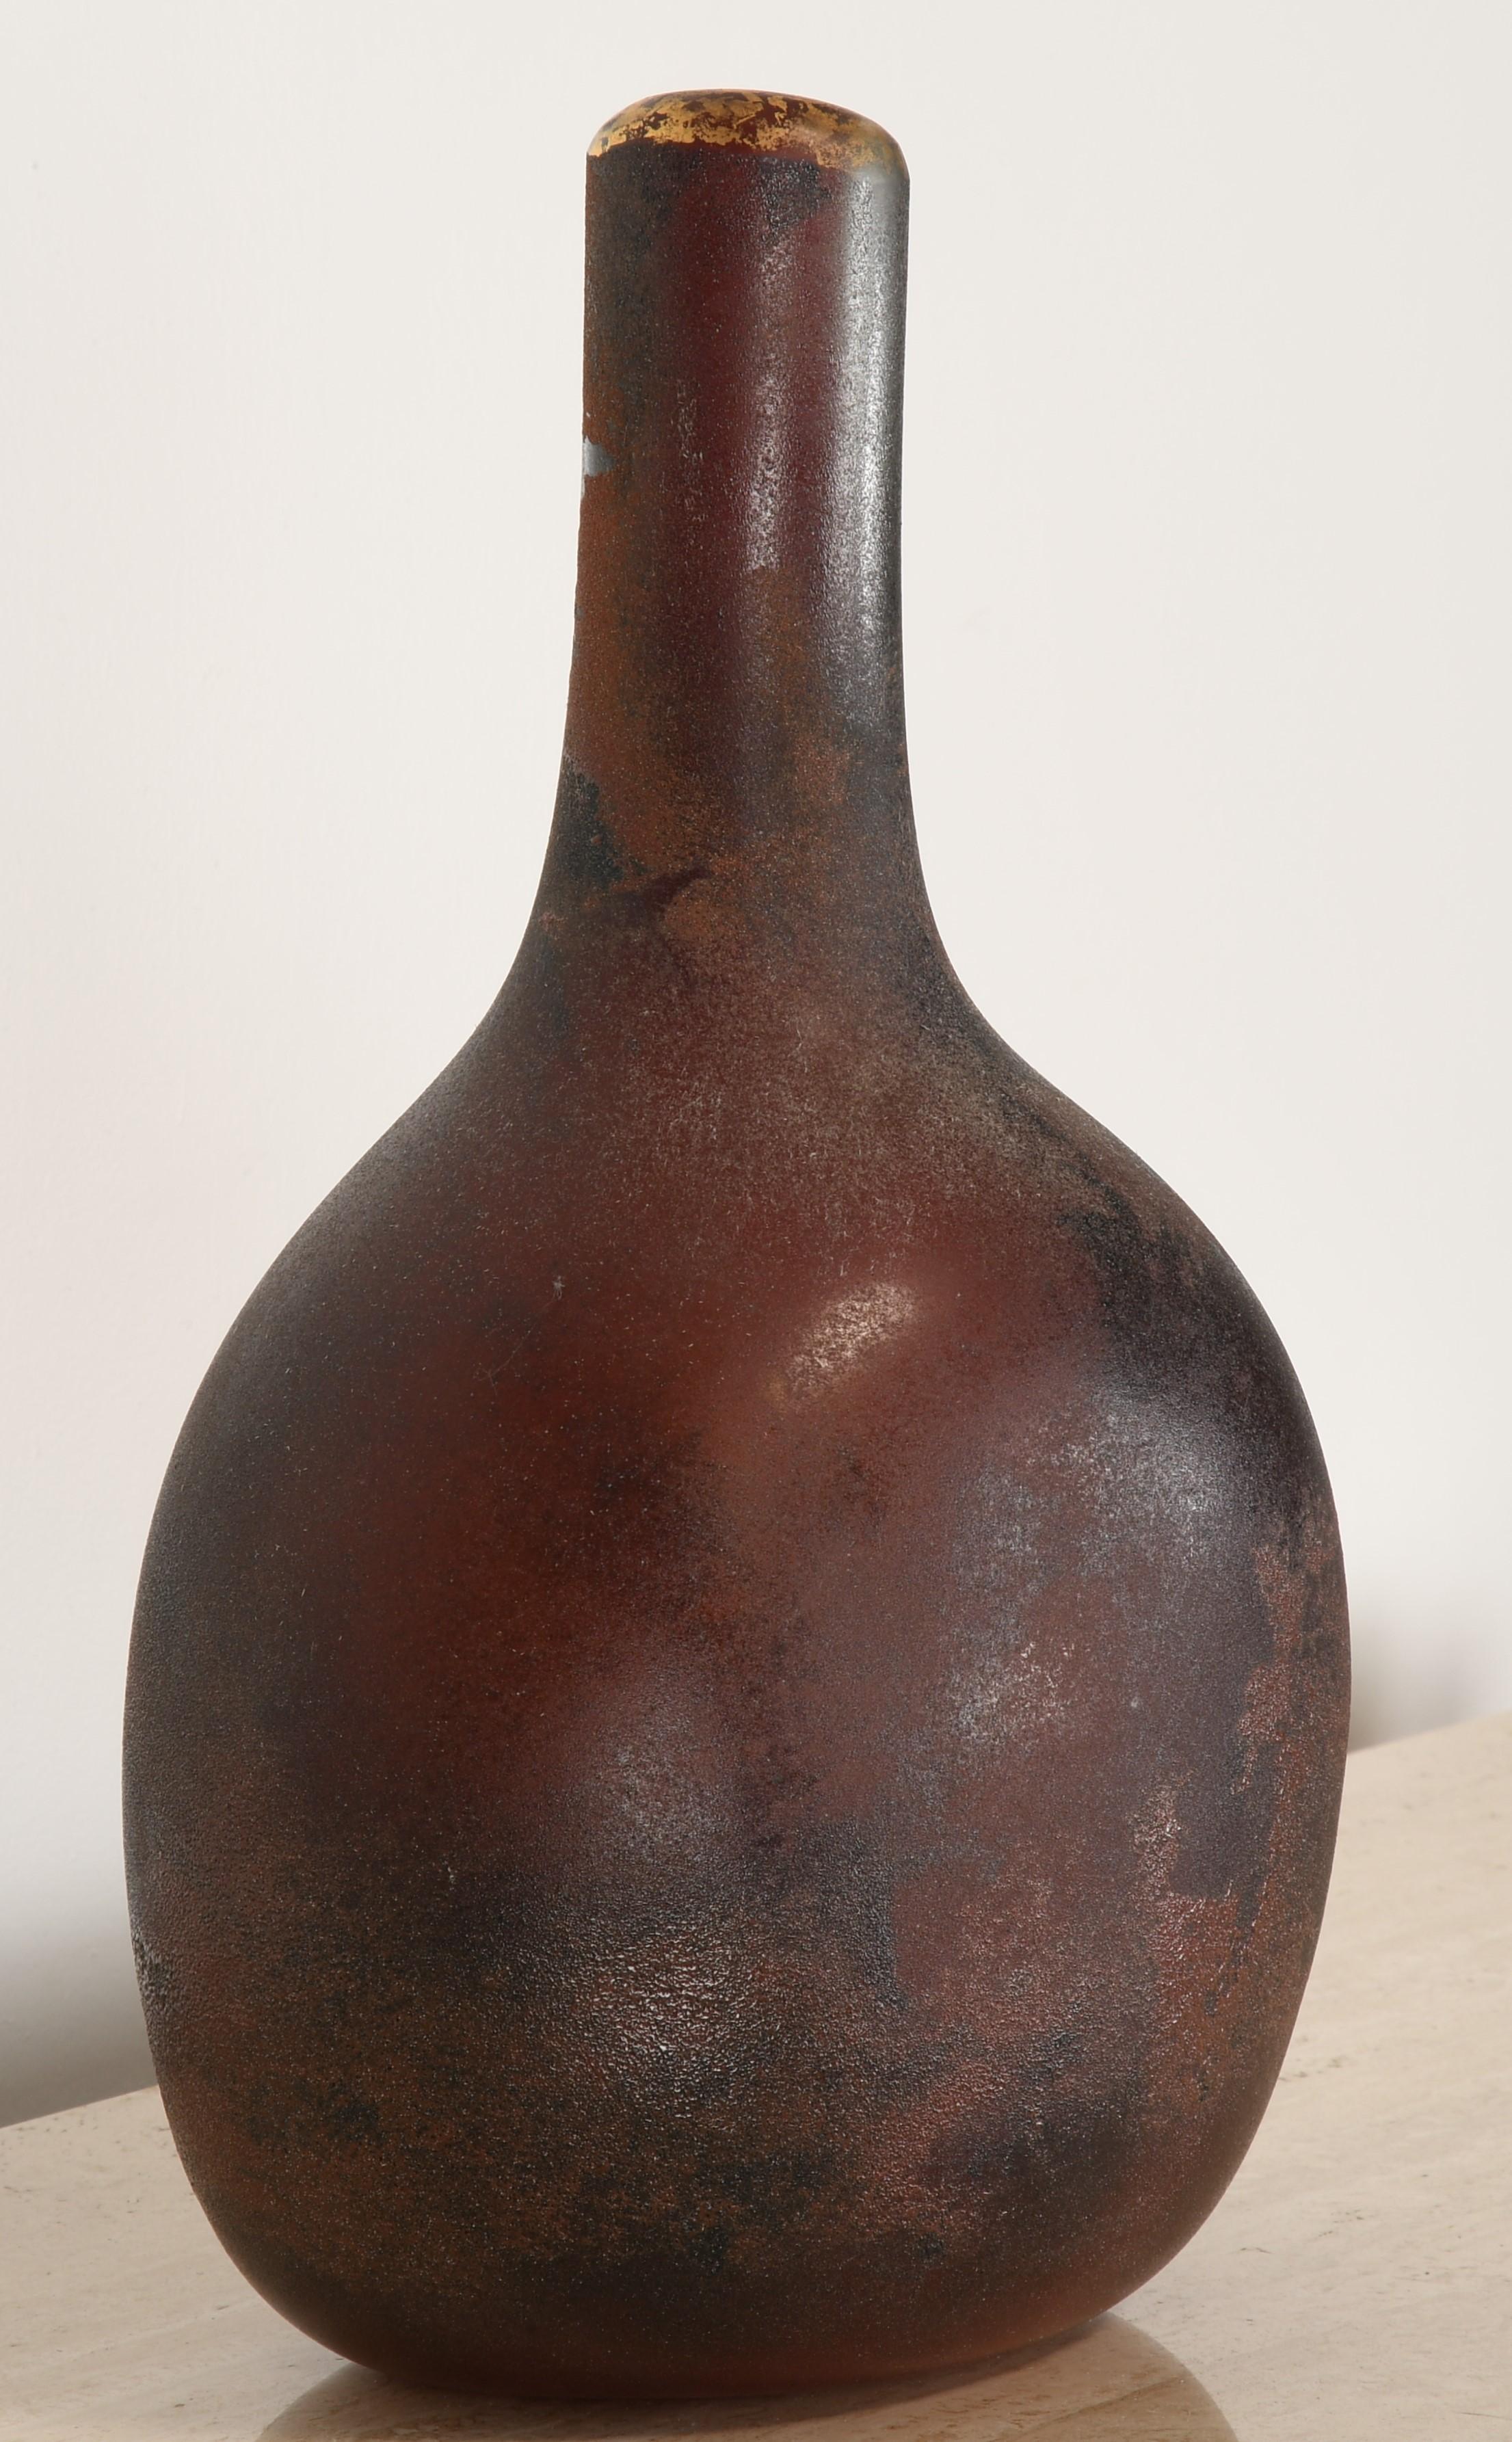 Contemporary Steve Tobin Art Glass Vase or Vessel, 2000s